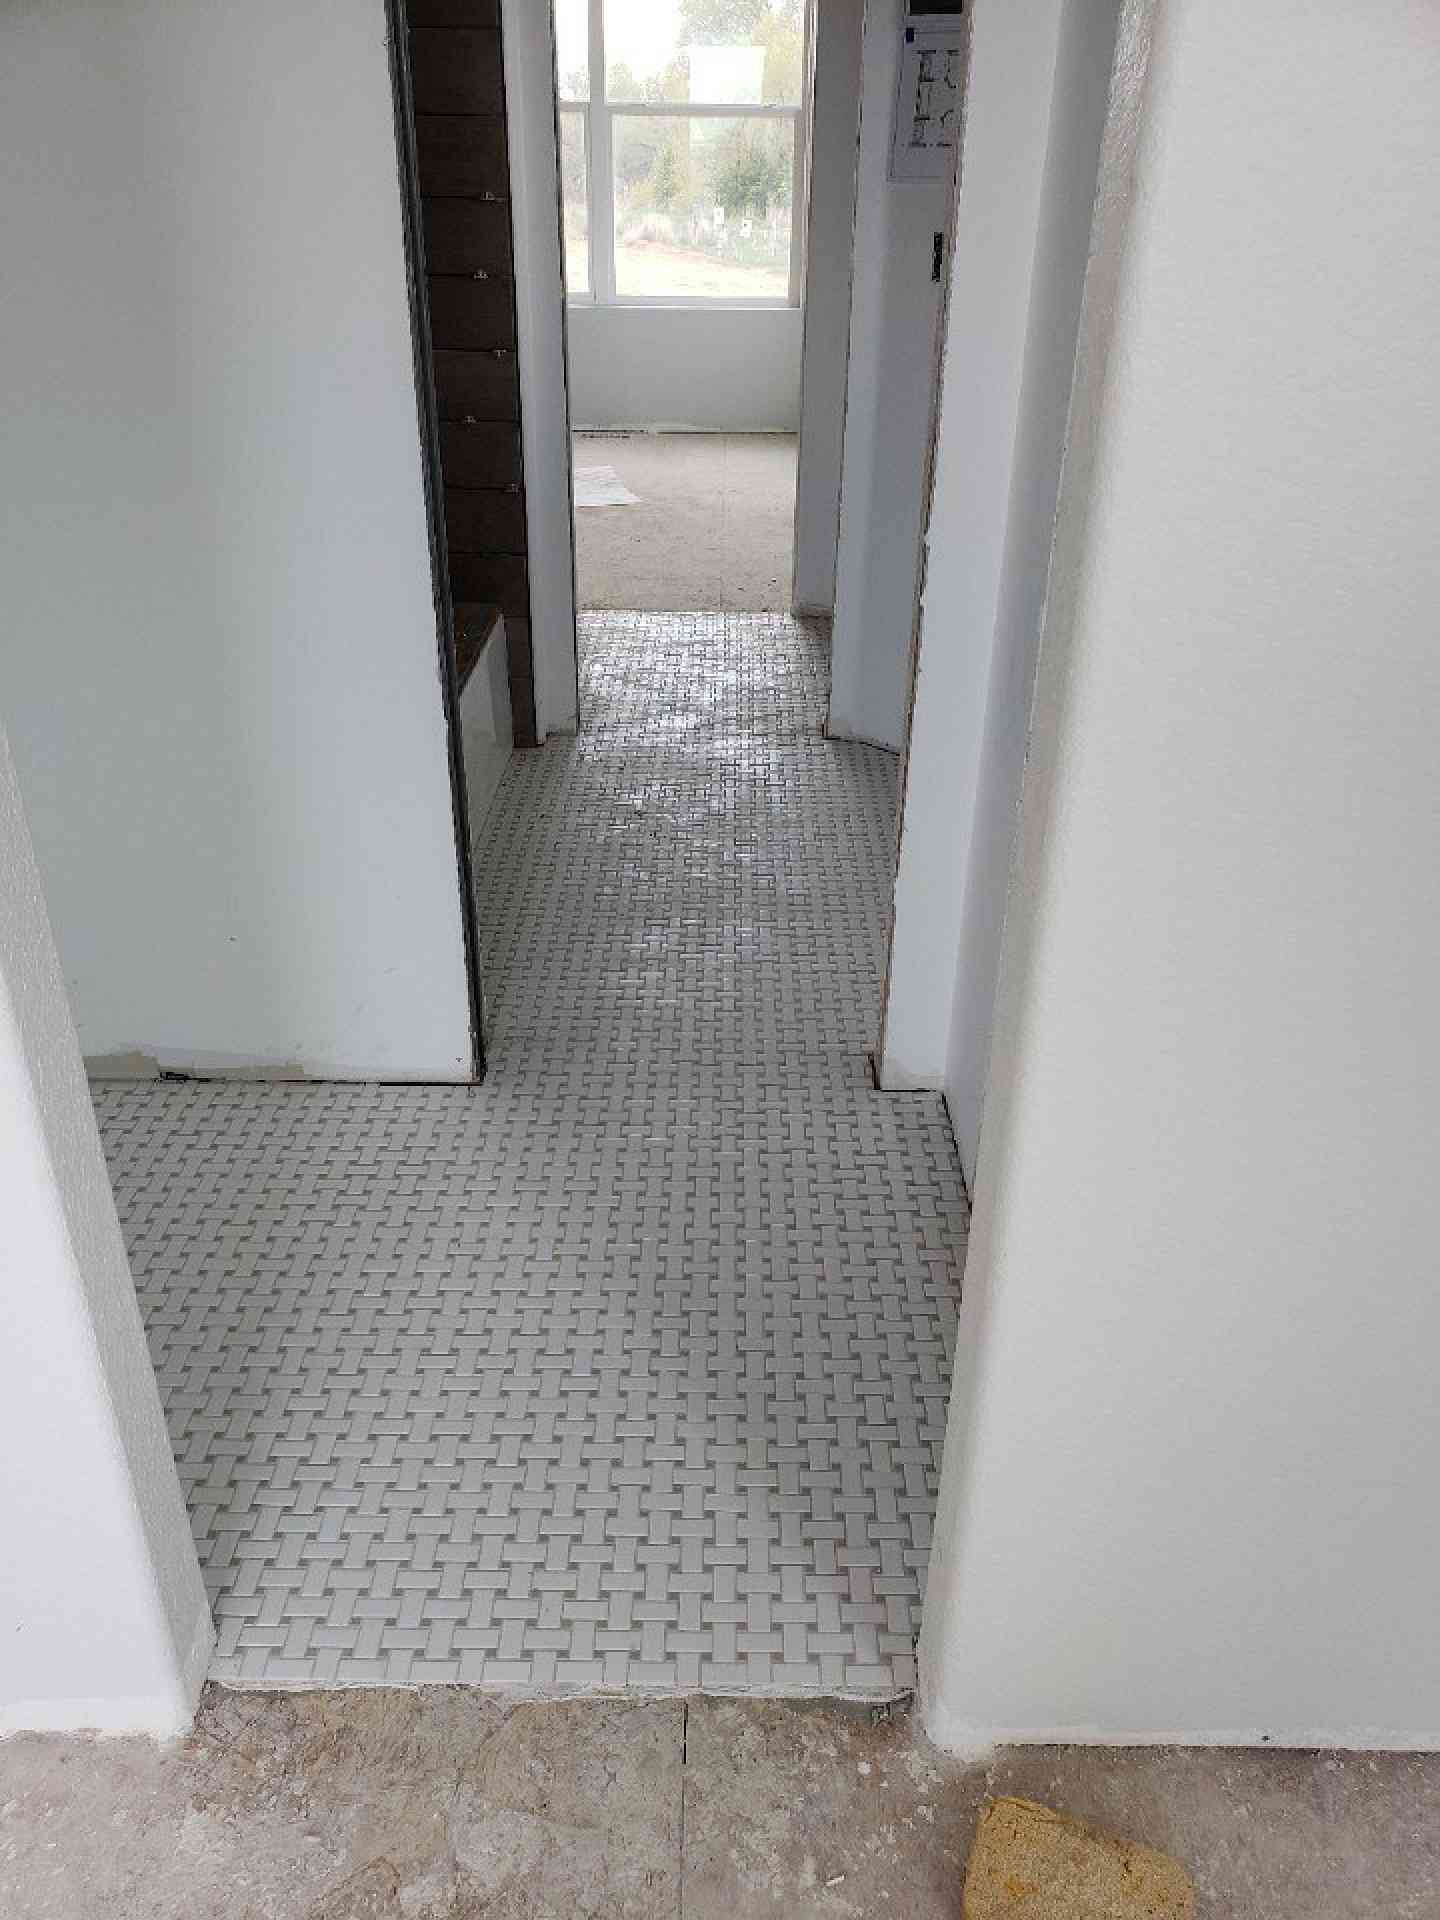 Tile Floor Installation In Jack And Jill Bathroom